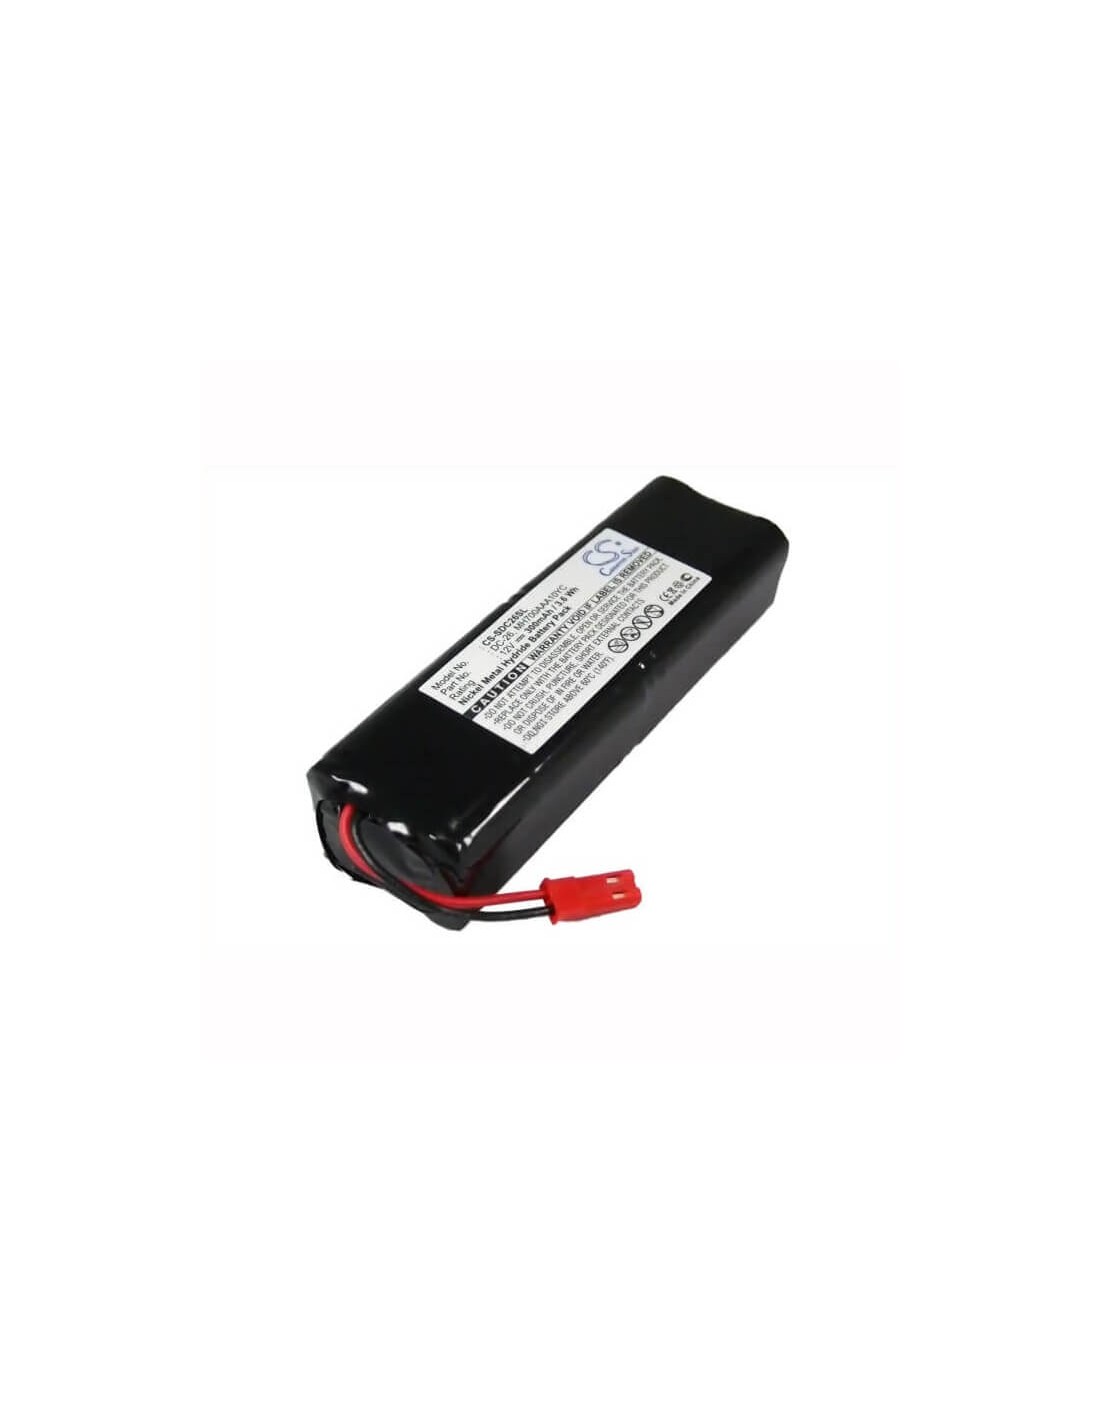 Battery for Sportdog Prohunter Sd-2400, St100-p, Swr-1 12.0V, 300mAh - 3.60Wh